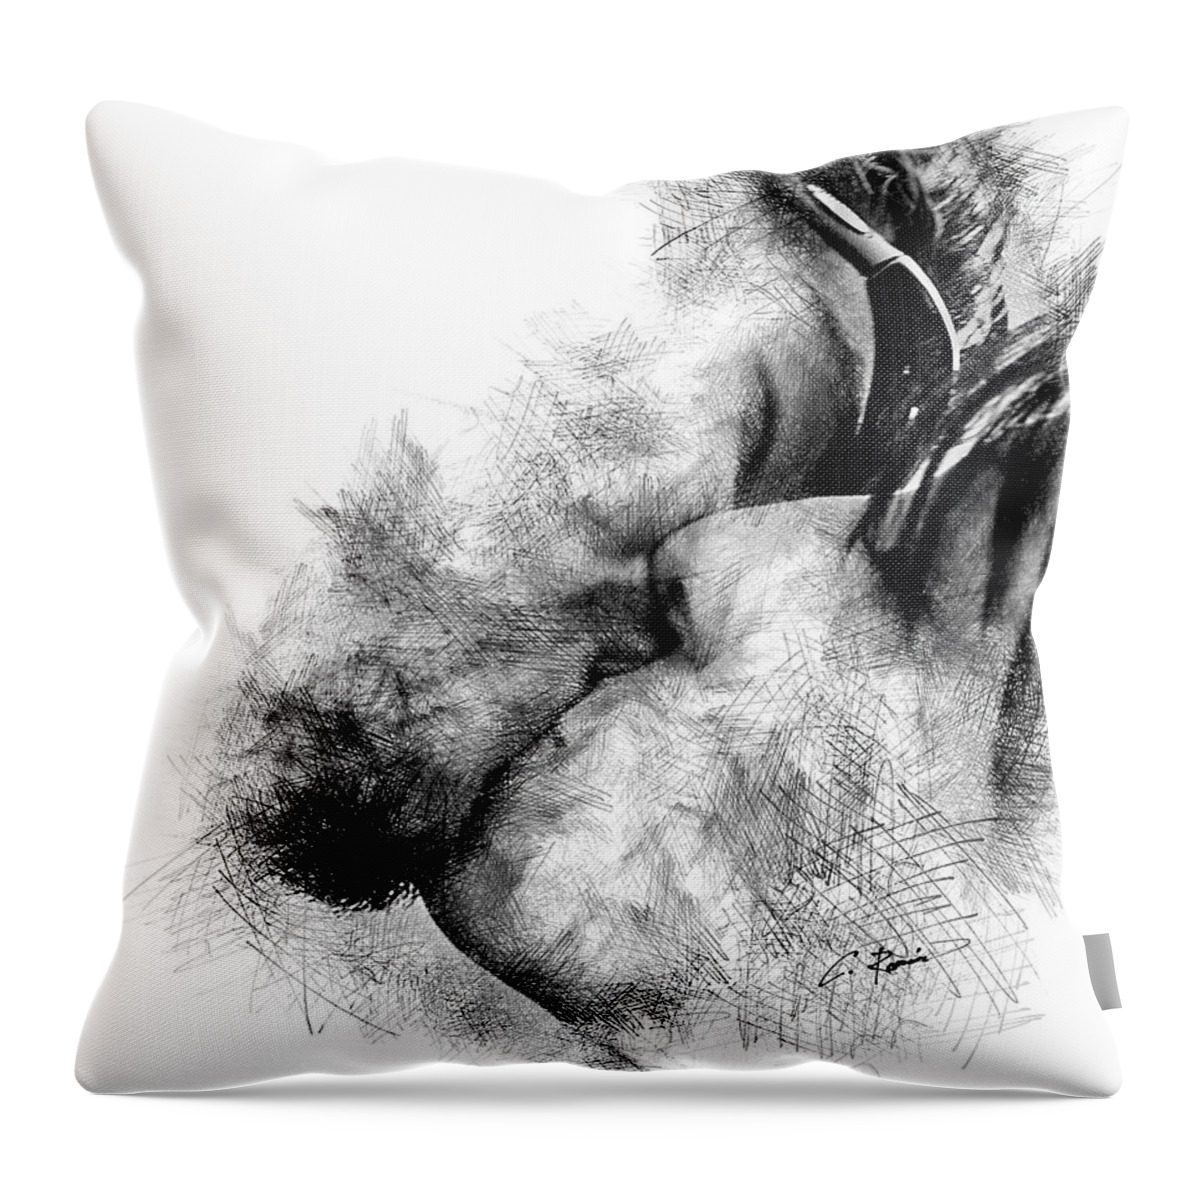 Kiss Throw Pillow featuring the digital art Kiss by Charlie Roman